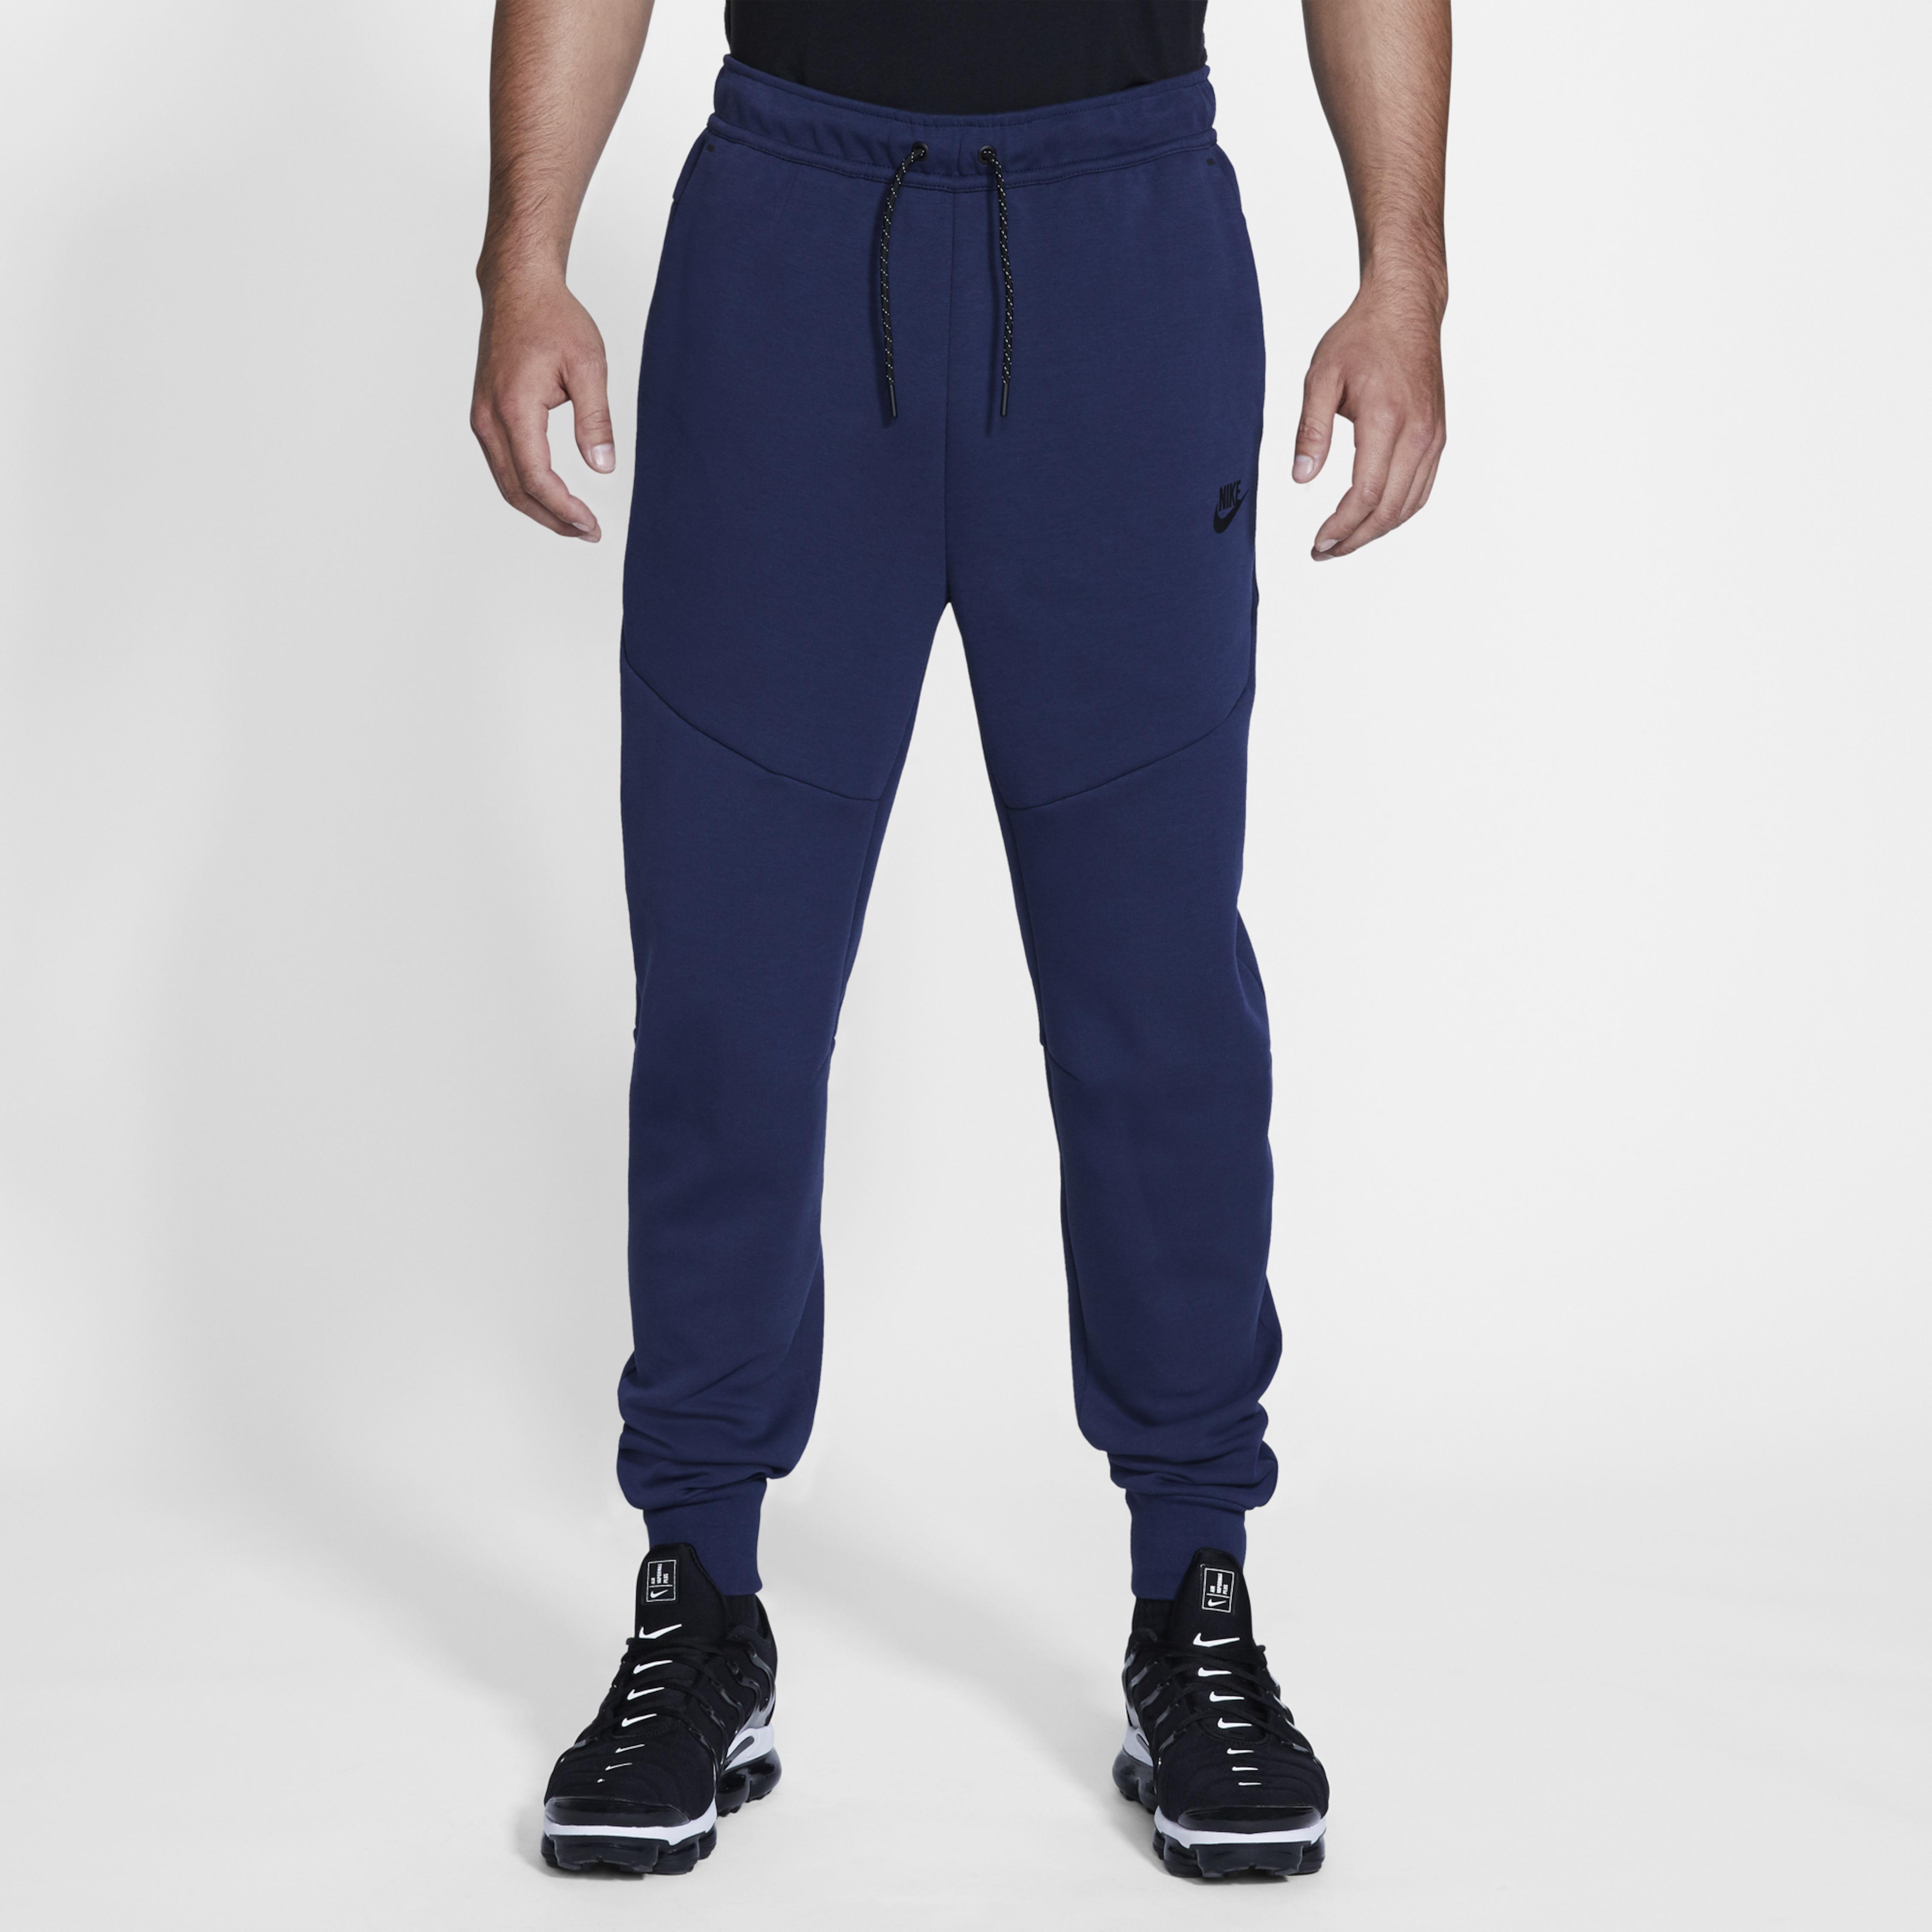 Nike Tech Fleece Joggers in Midnight Navy/Black (Blue) for Men - Save 14% -  Lyst